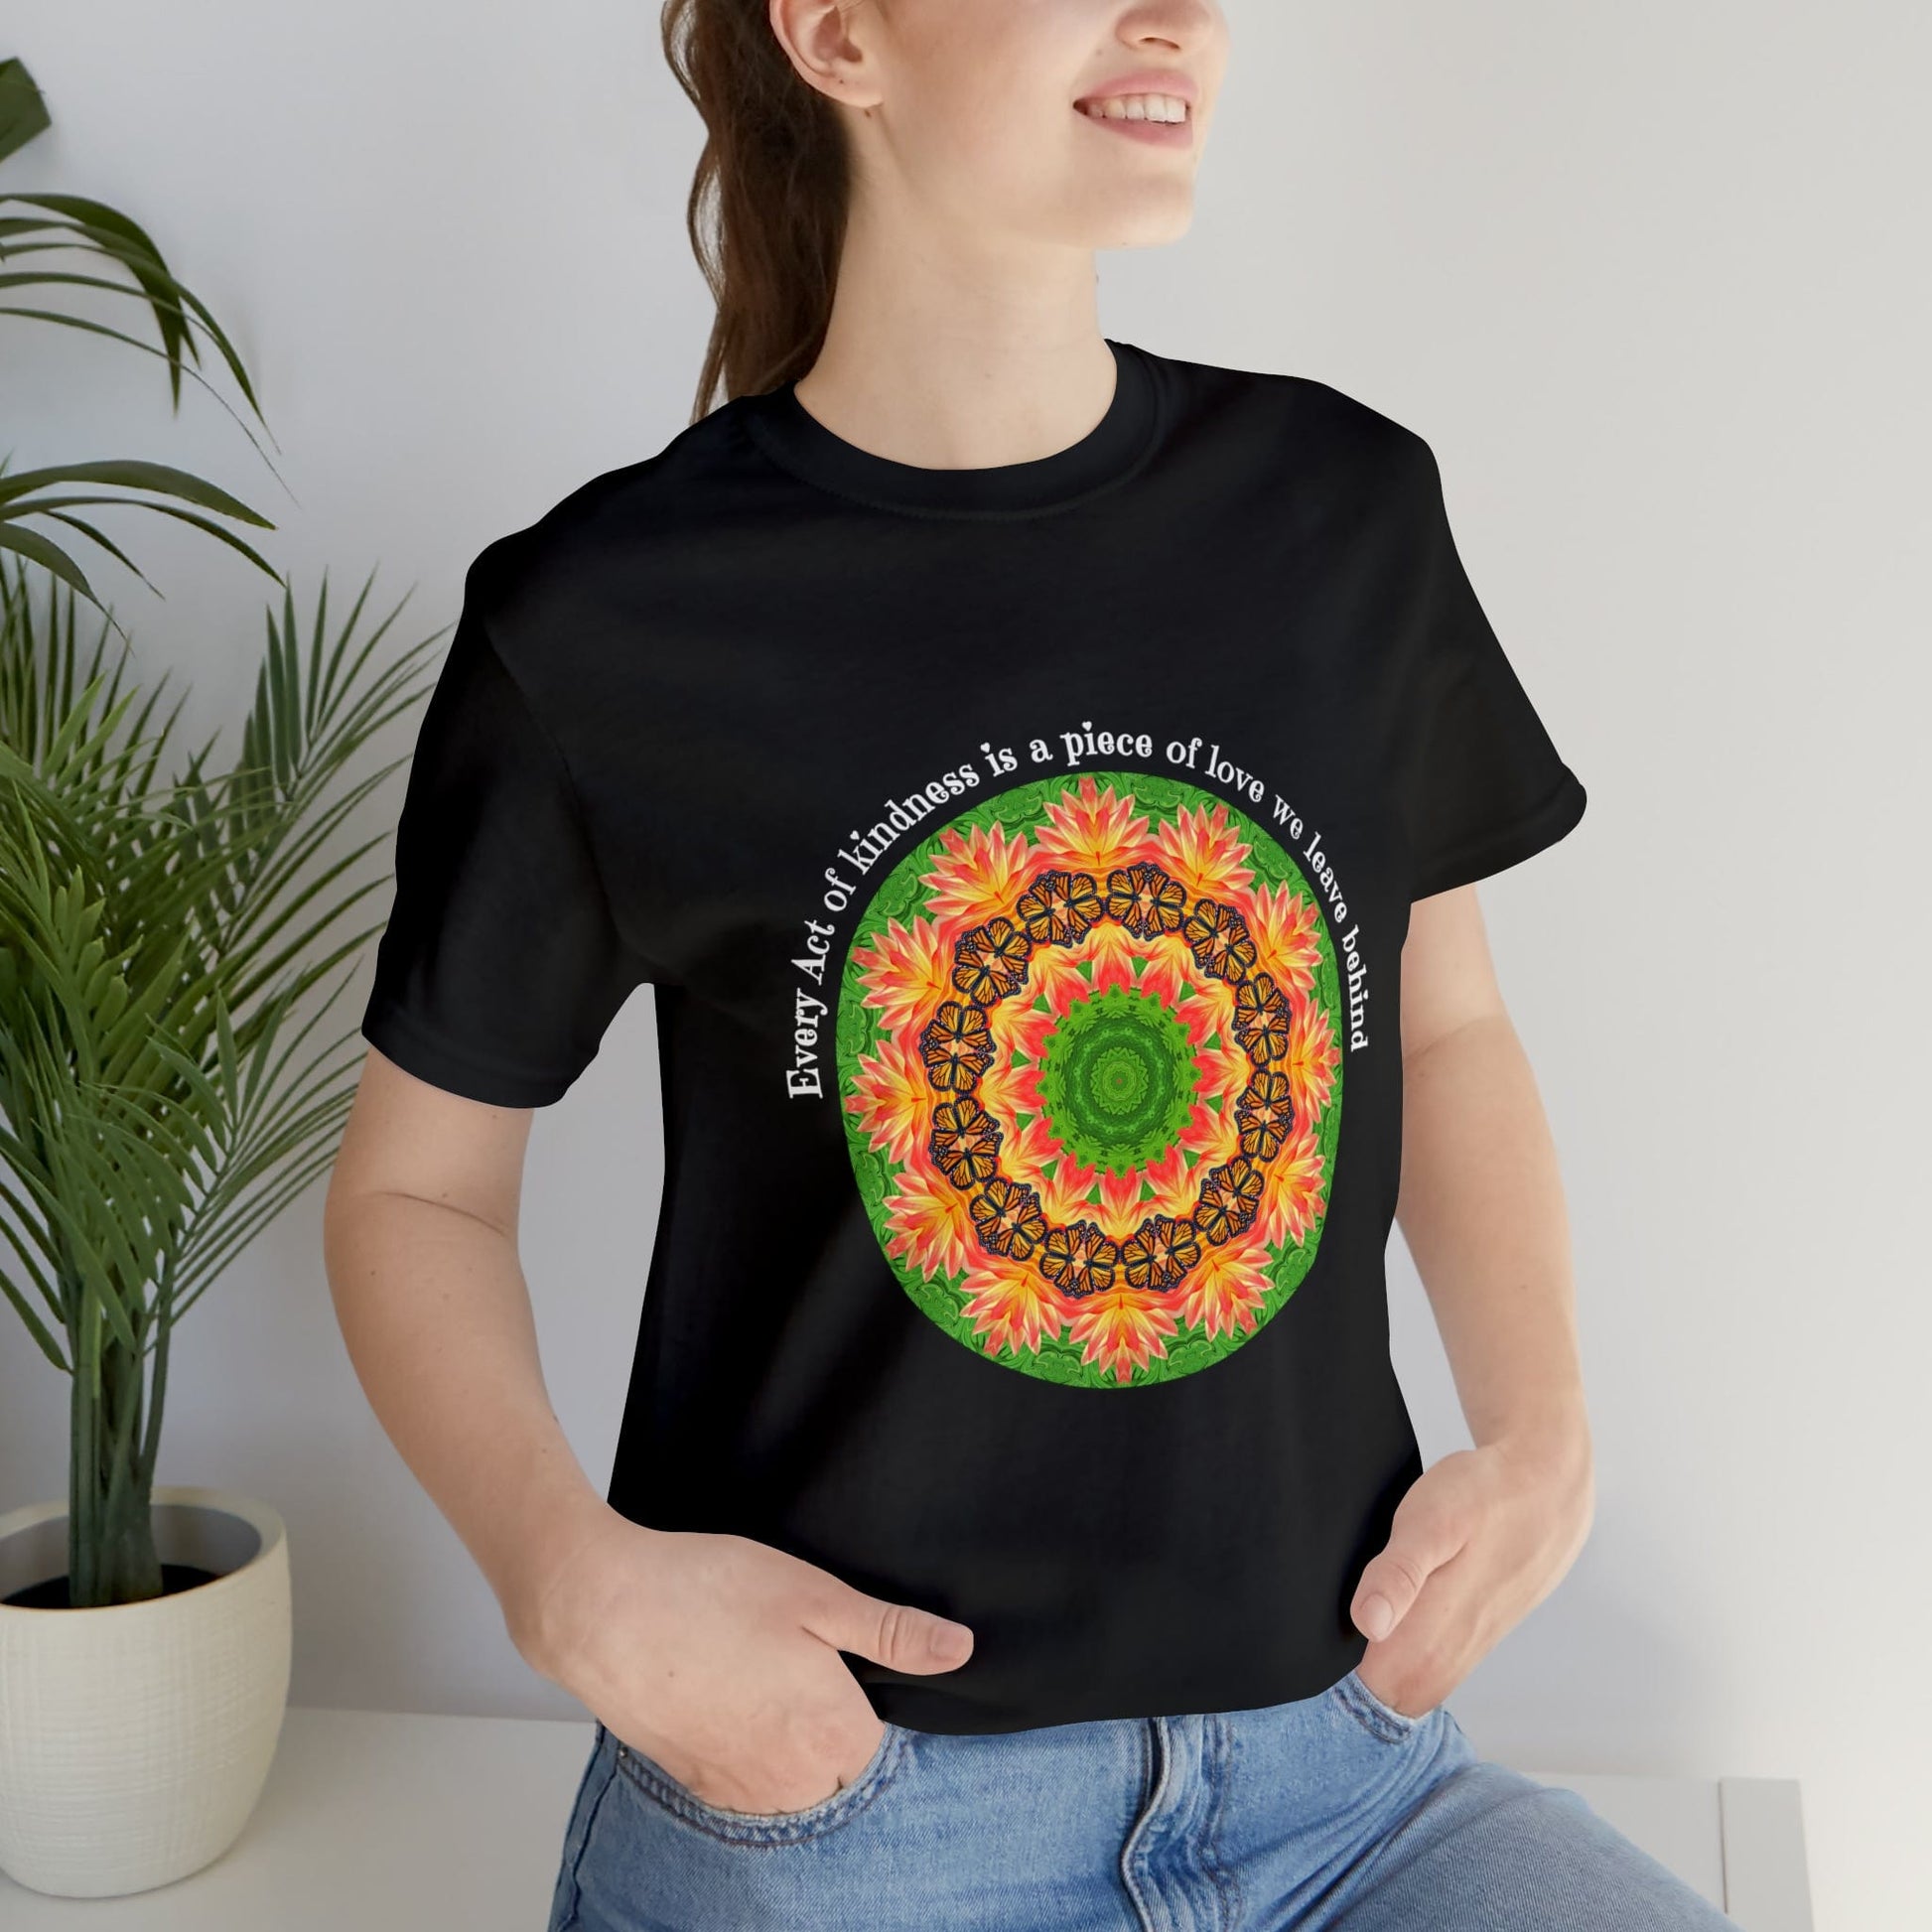 Beautiful Butterfly Mandala Art Graphic Tee Shirt - Cottagecore Clothing A Nature Lovers Delight Ornate Orbit black